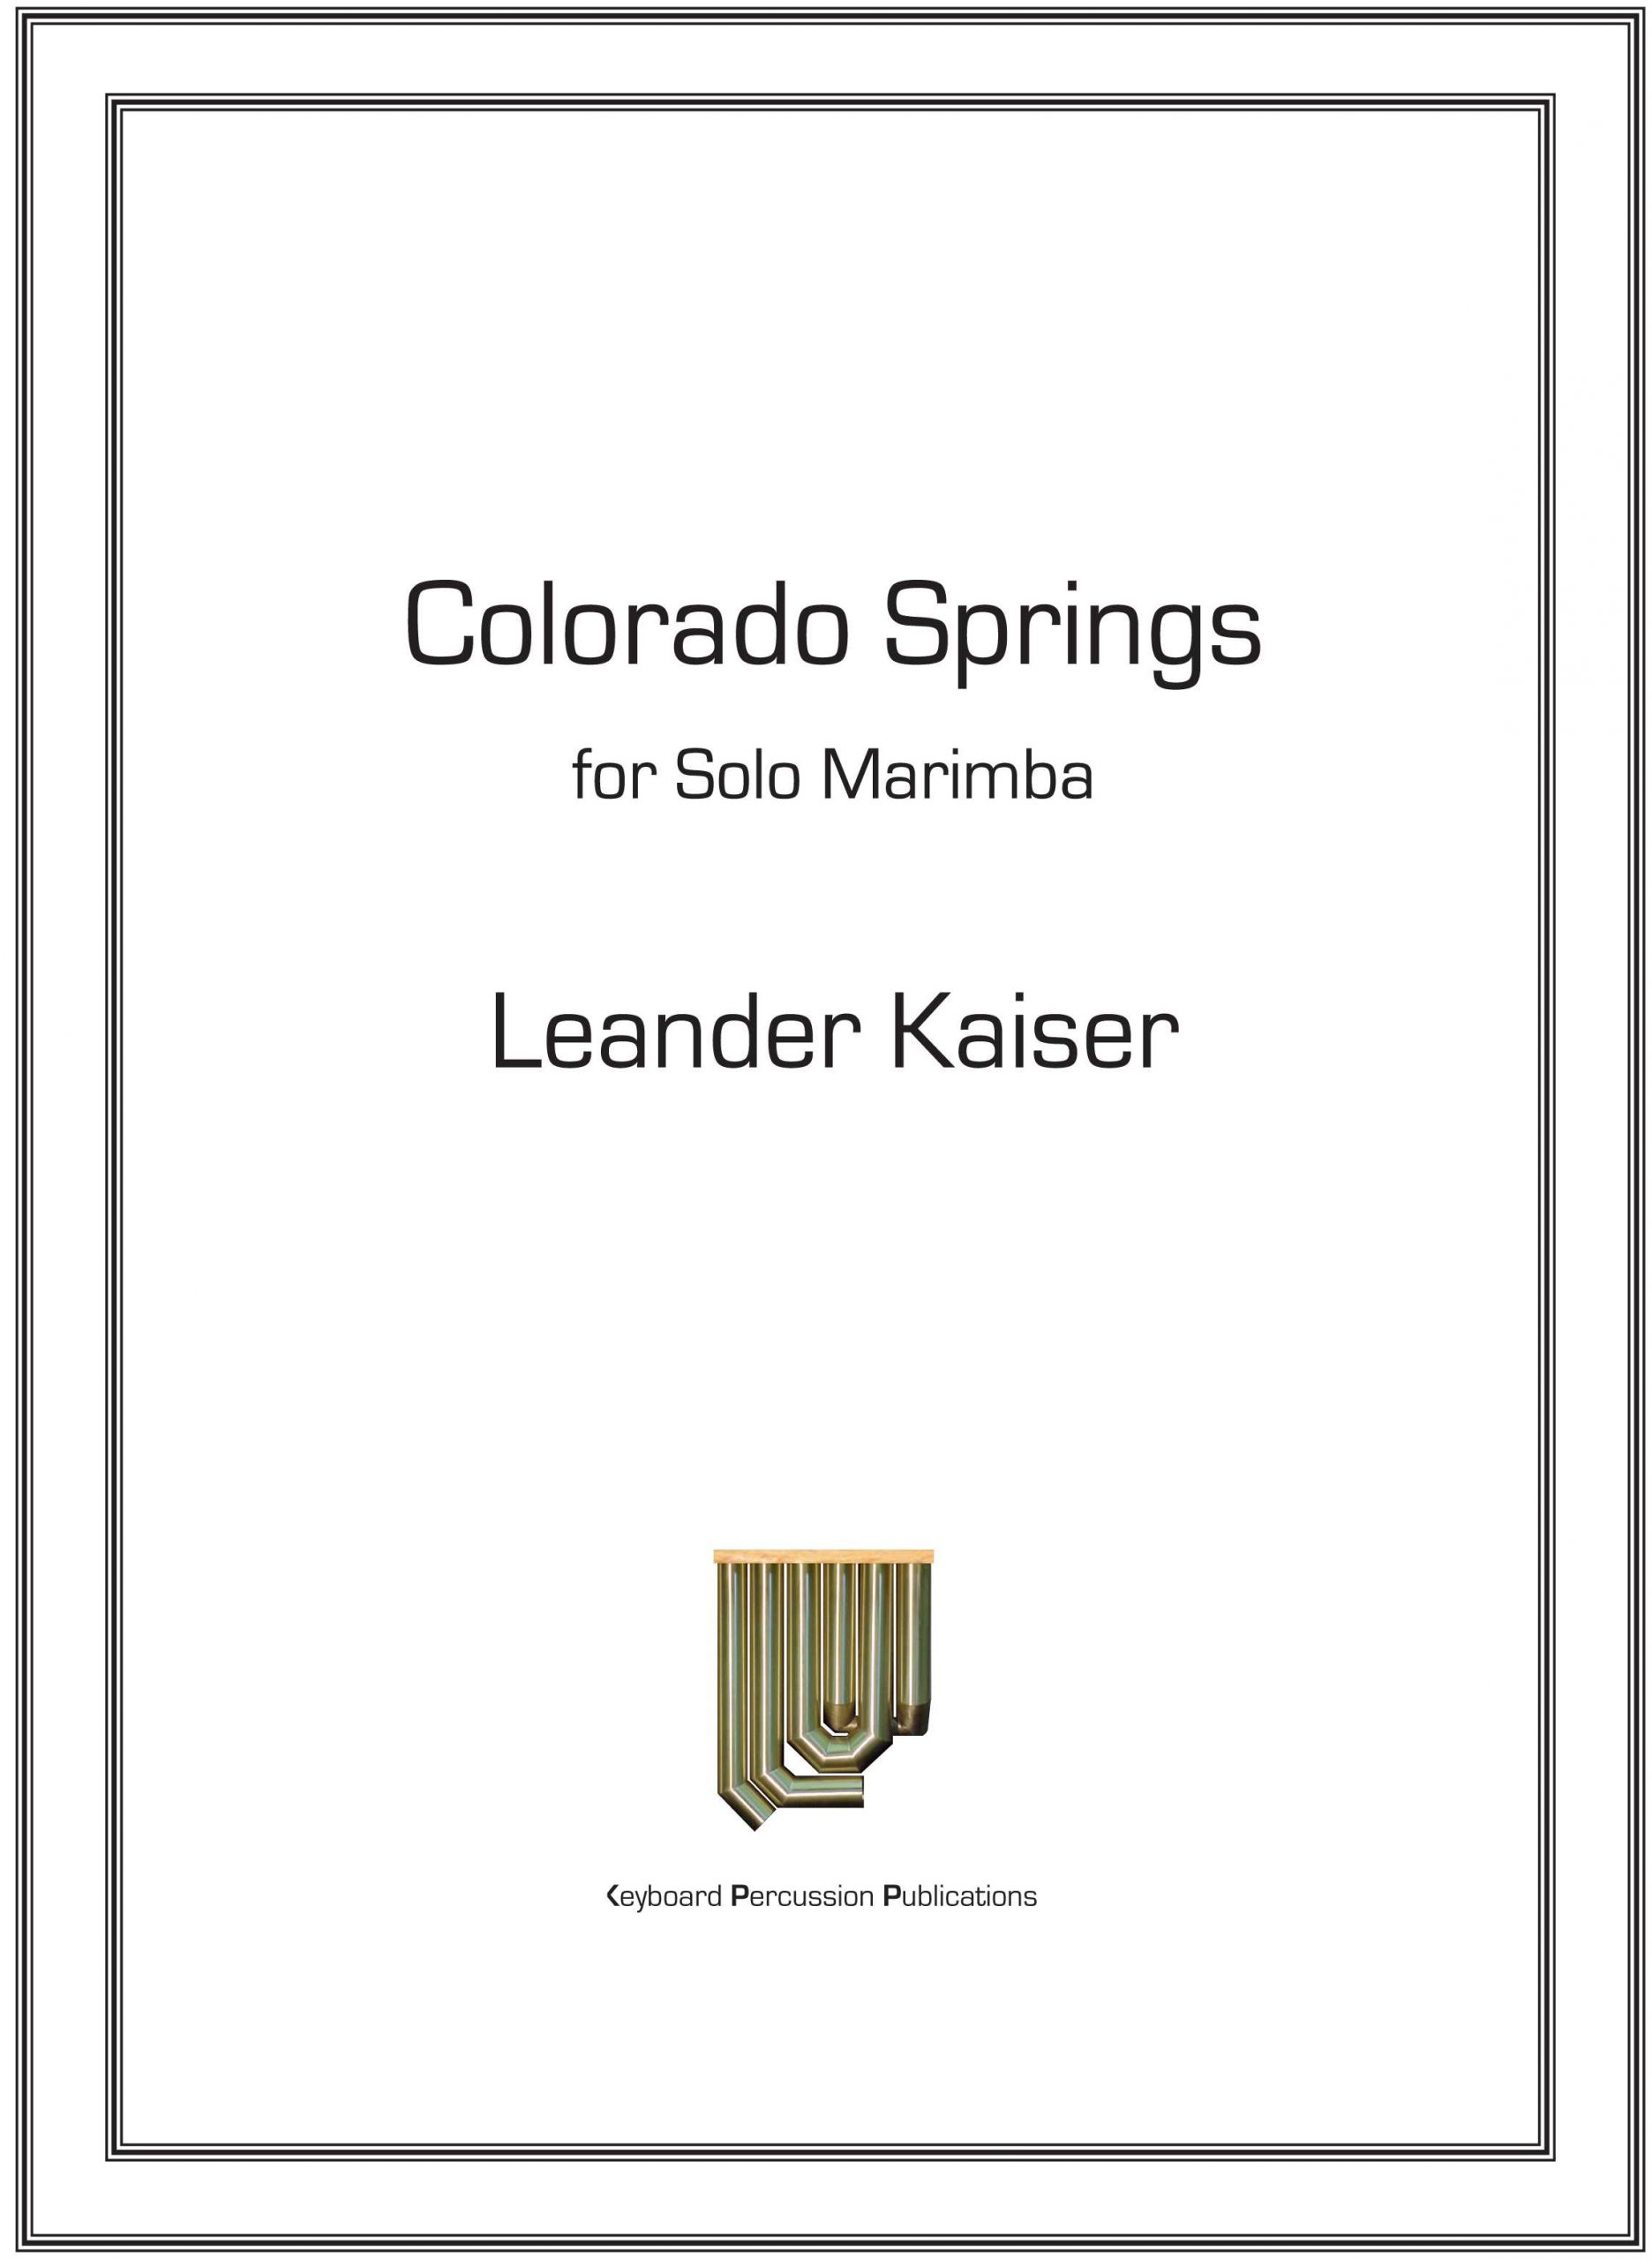 Colorado Springs by Leander Kaiser